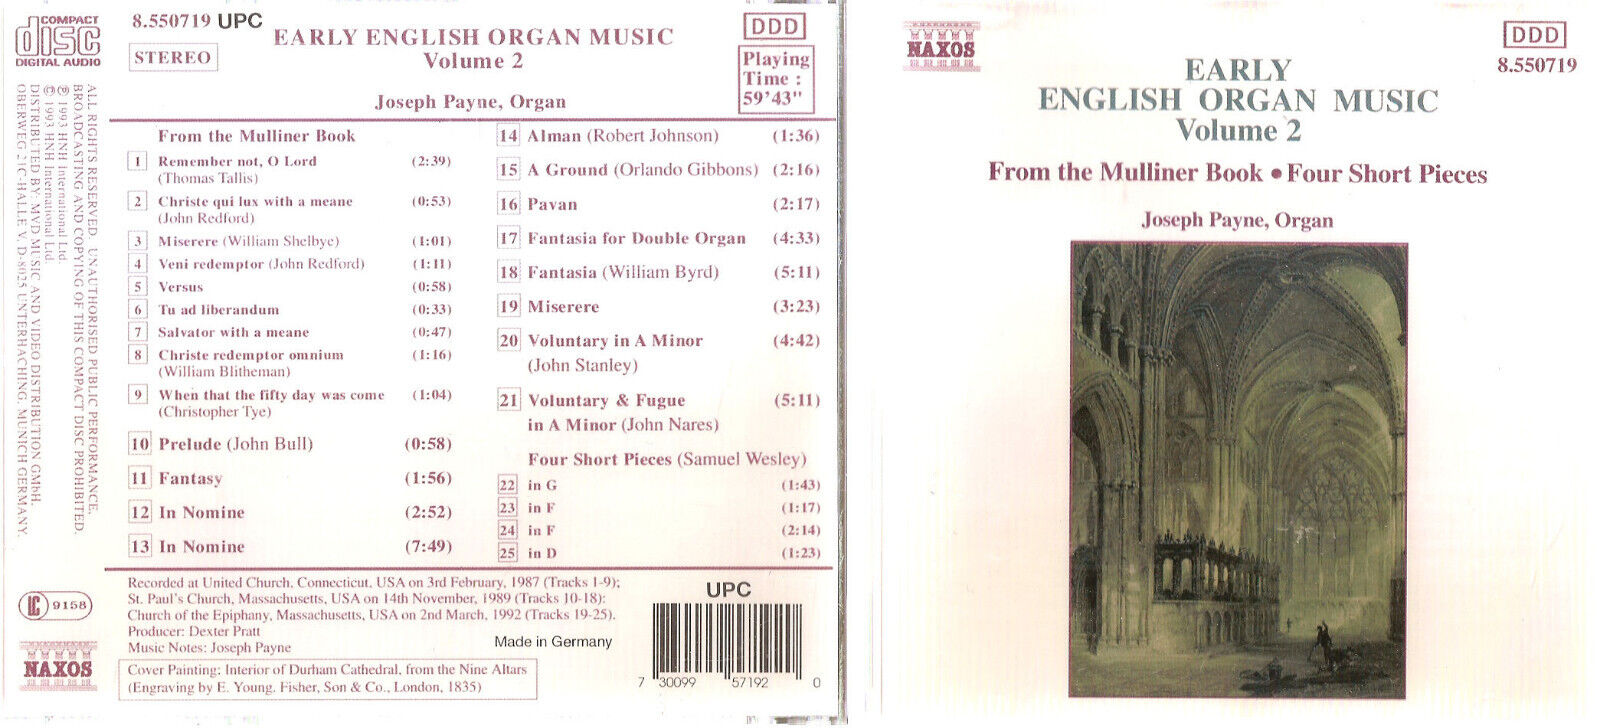 Joseph Payne - Vol. 2 Early English Organ Mus (CD, 1994) #0722FG